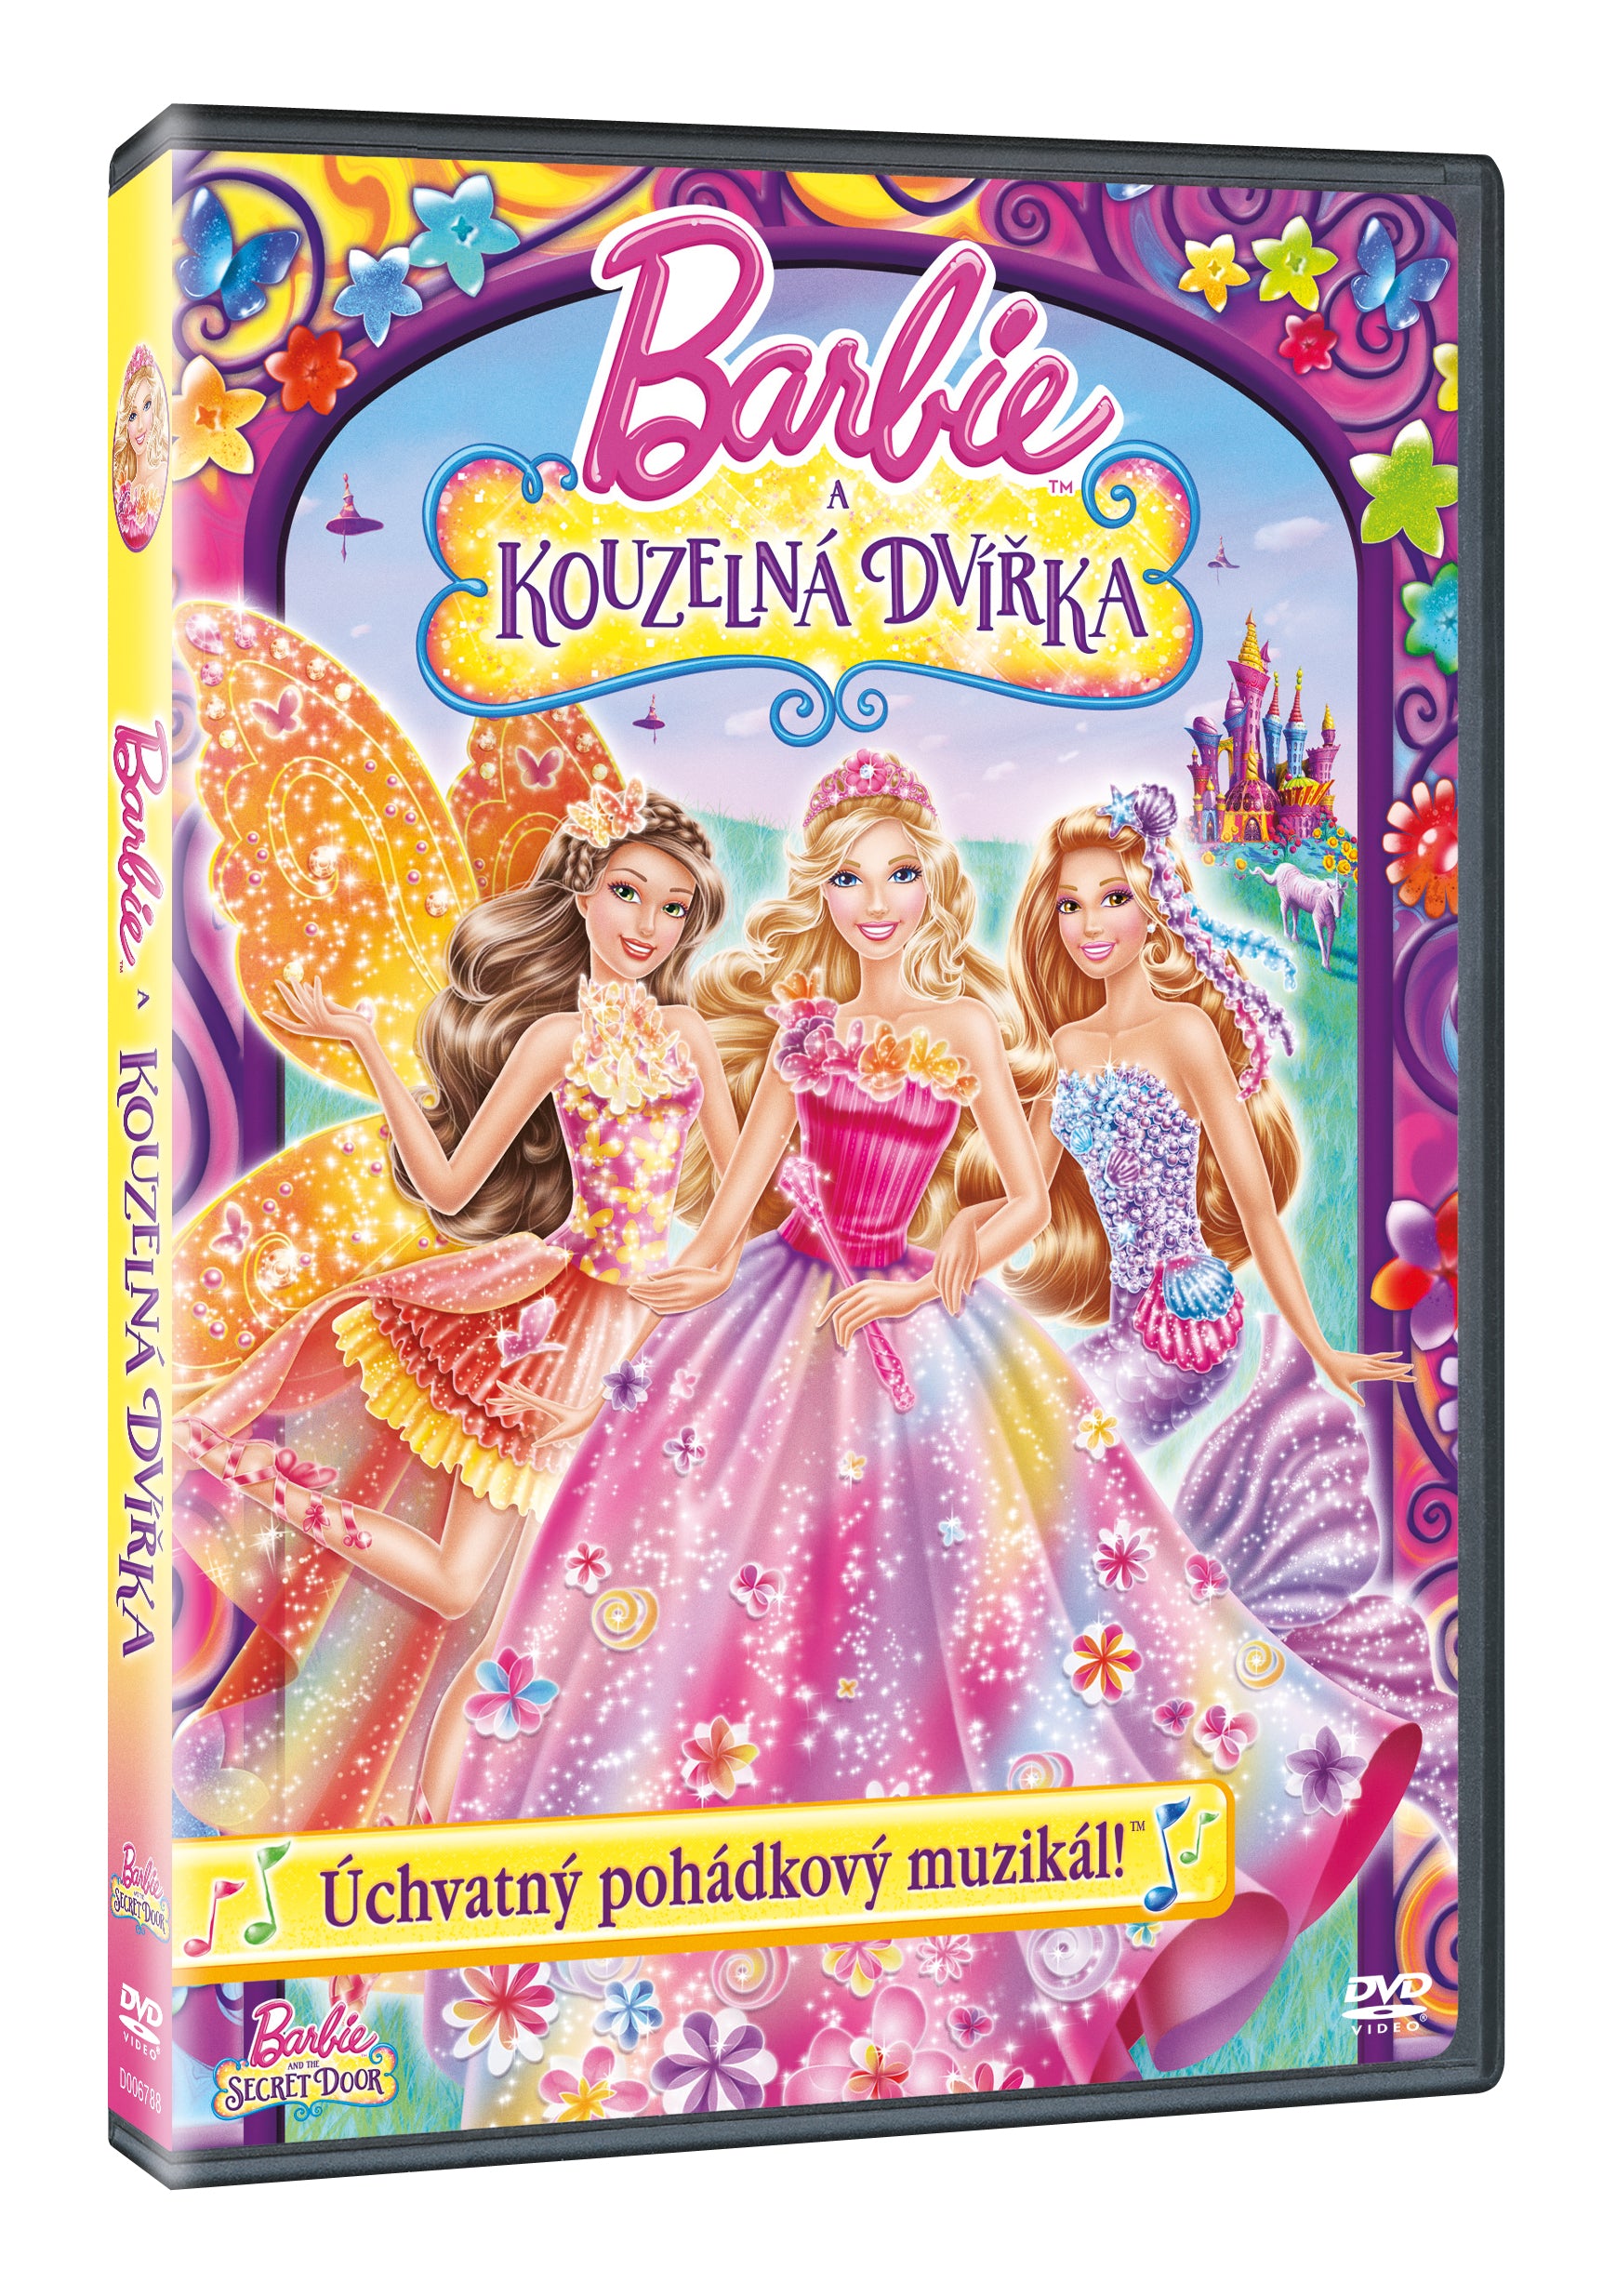 Barbie a Kouzelna dvirka DVD / Barbie and the Secret Door